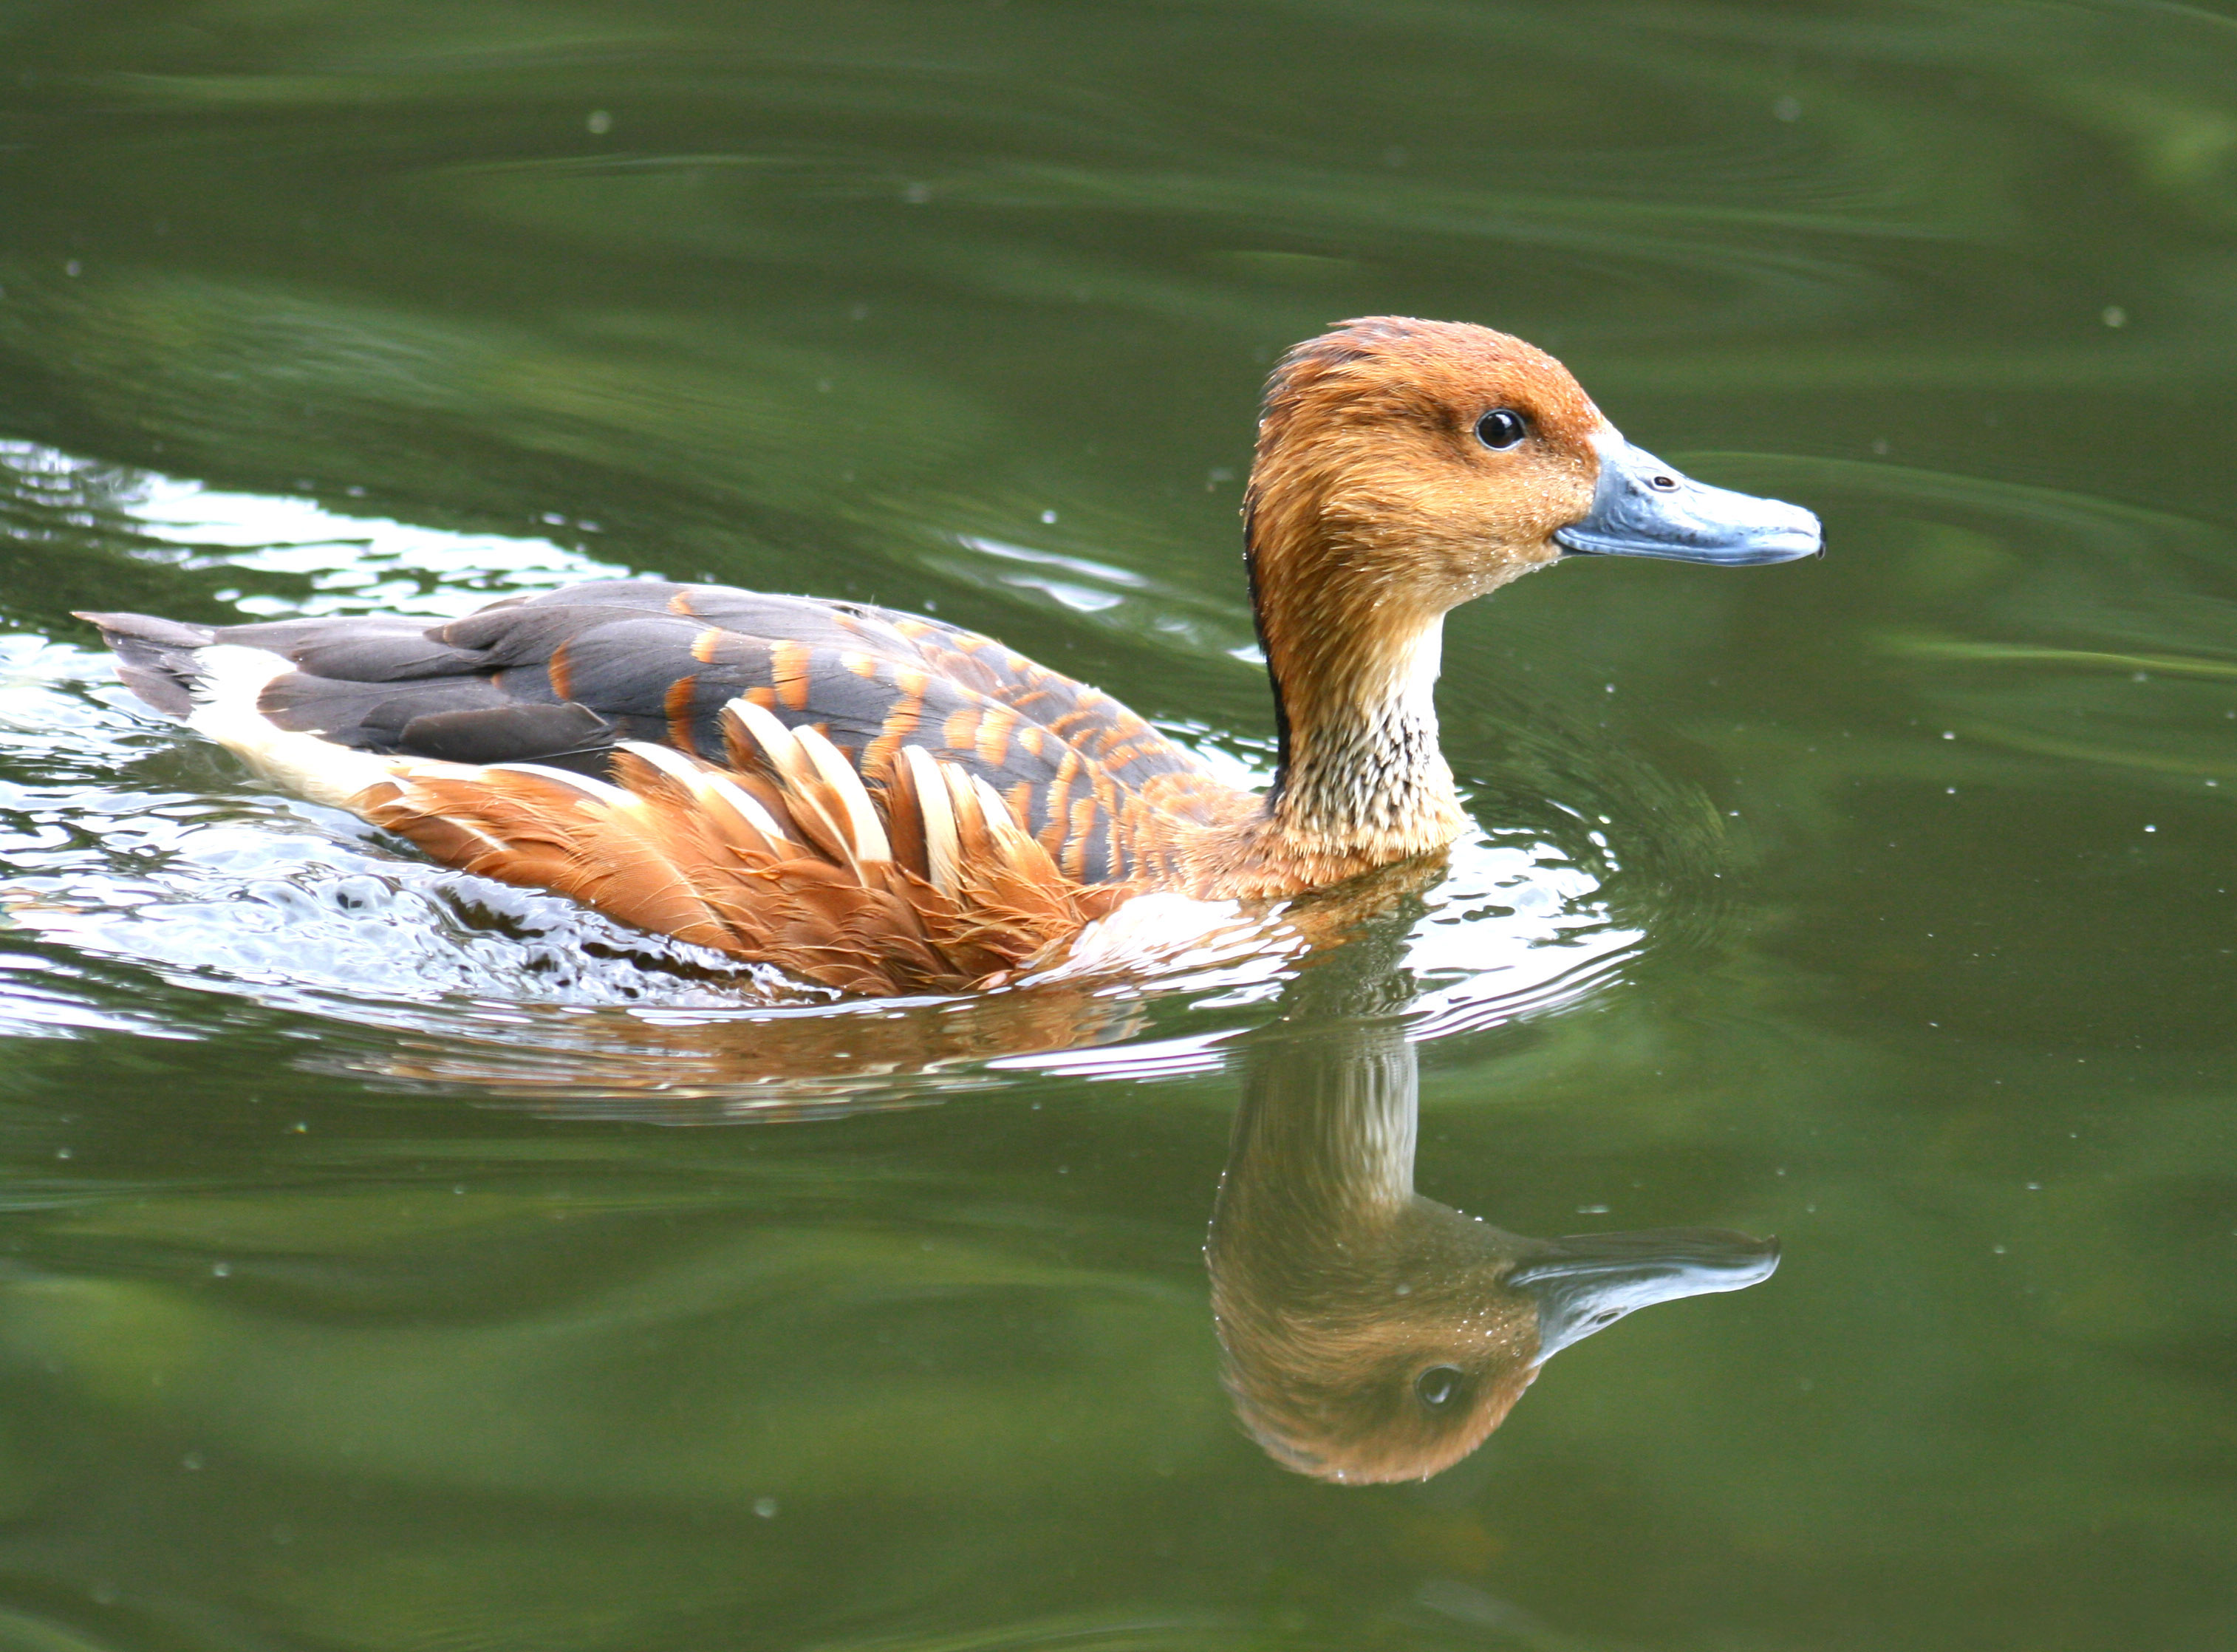 File:Swimming duck, Hyde Park, London.jpg - Wikimedia Commons